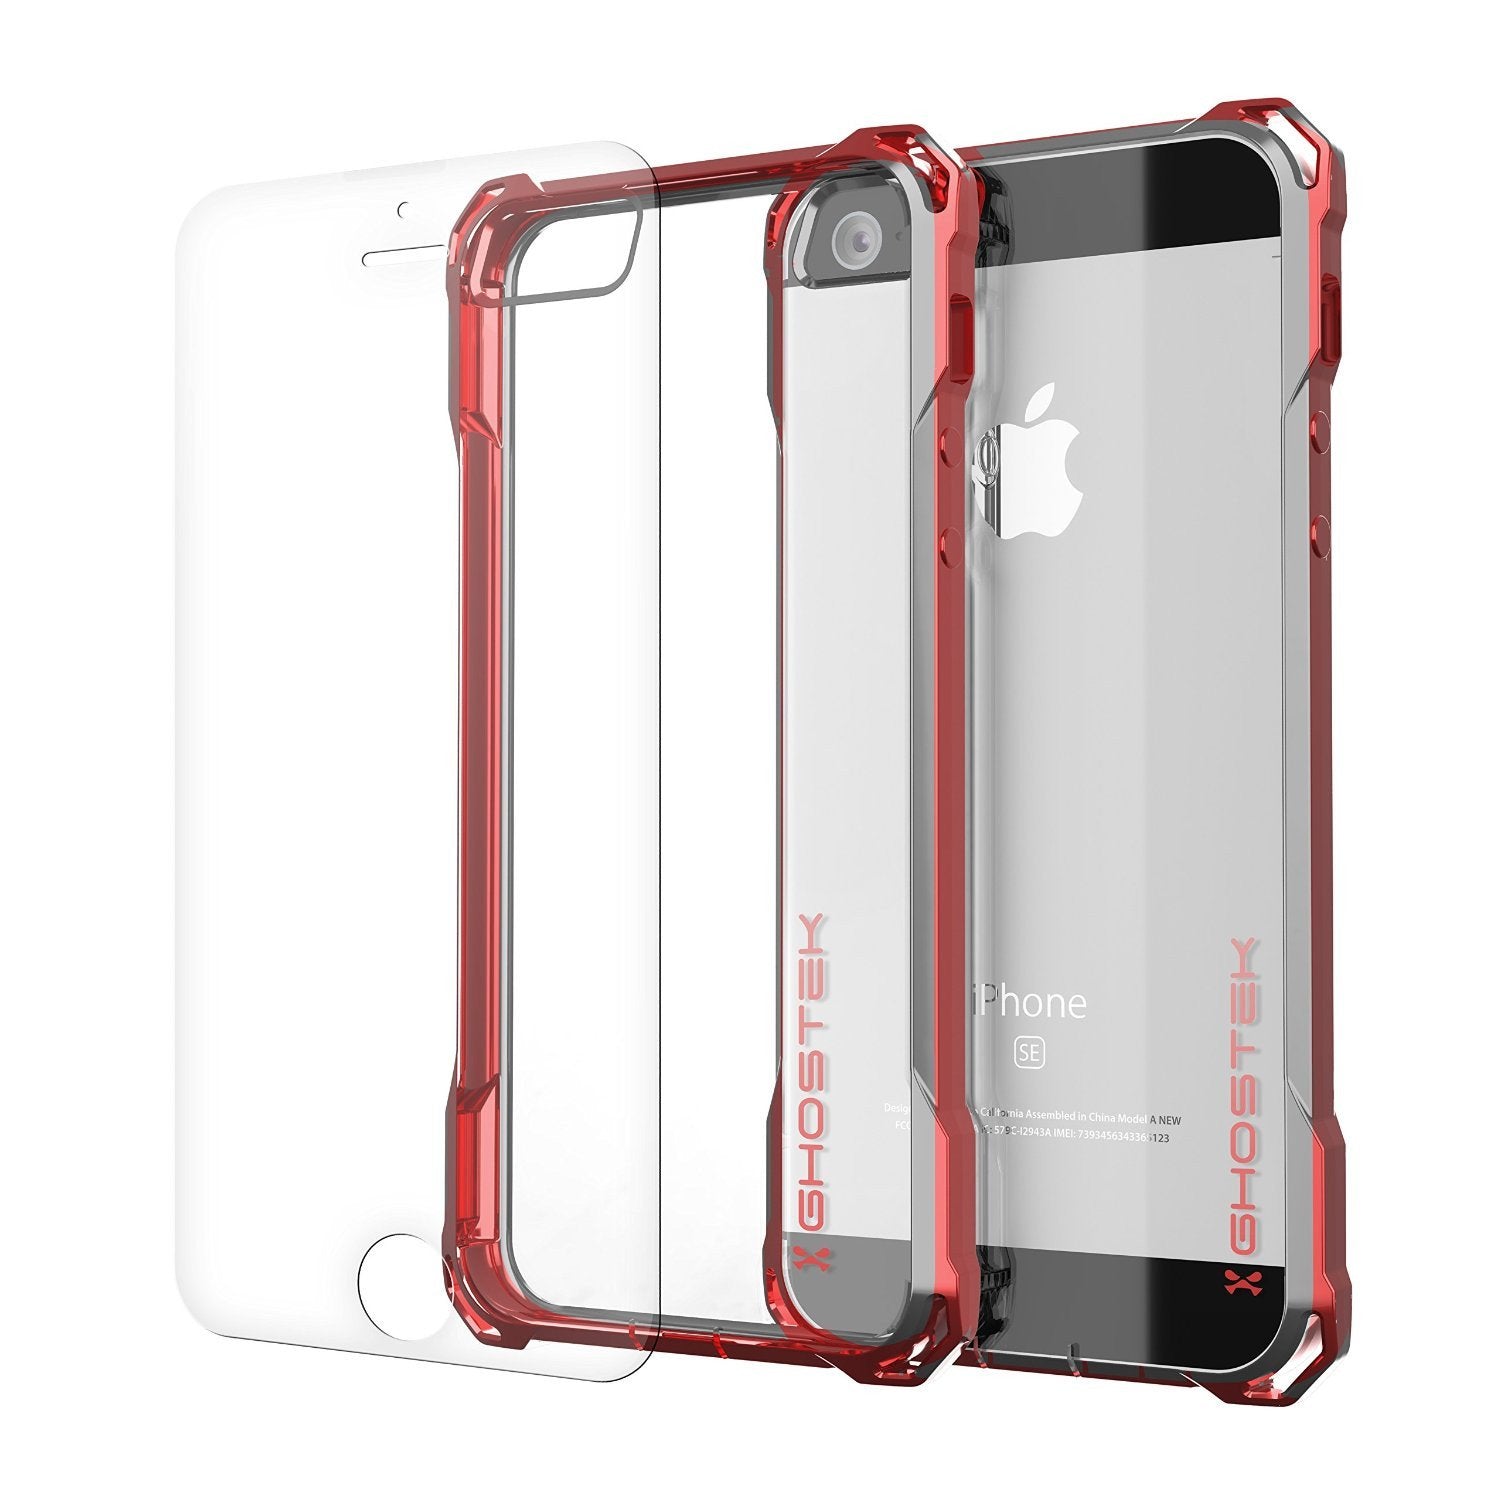 iPhone SE Case, Ghostek® Covert Red, Premium Impact Protective Armor | Lifetime Warranty Exchange